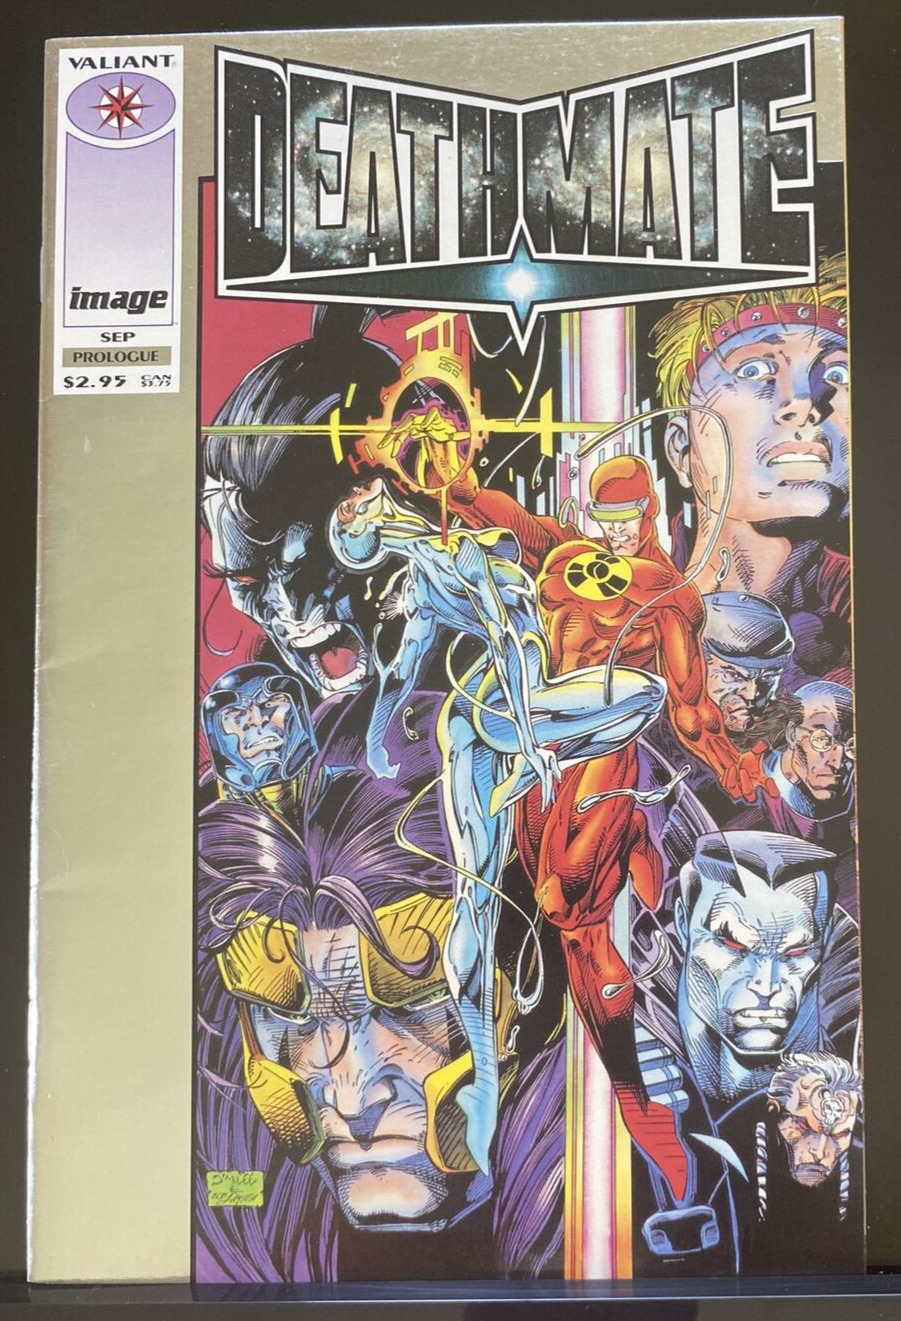 Deathmate Prologue  Image-Valiant Comics 1993 Silver Foil Cover